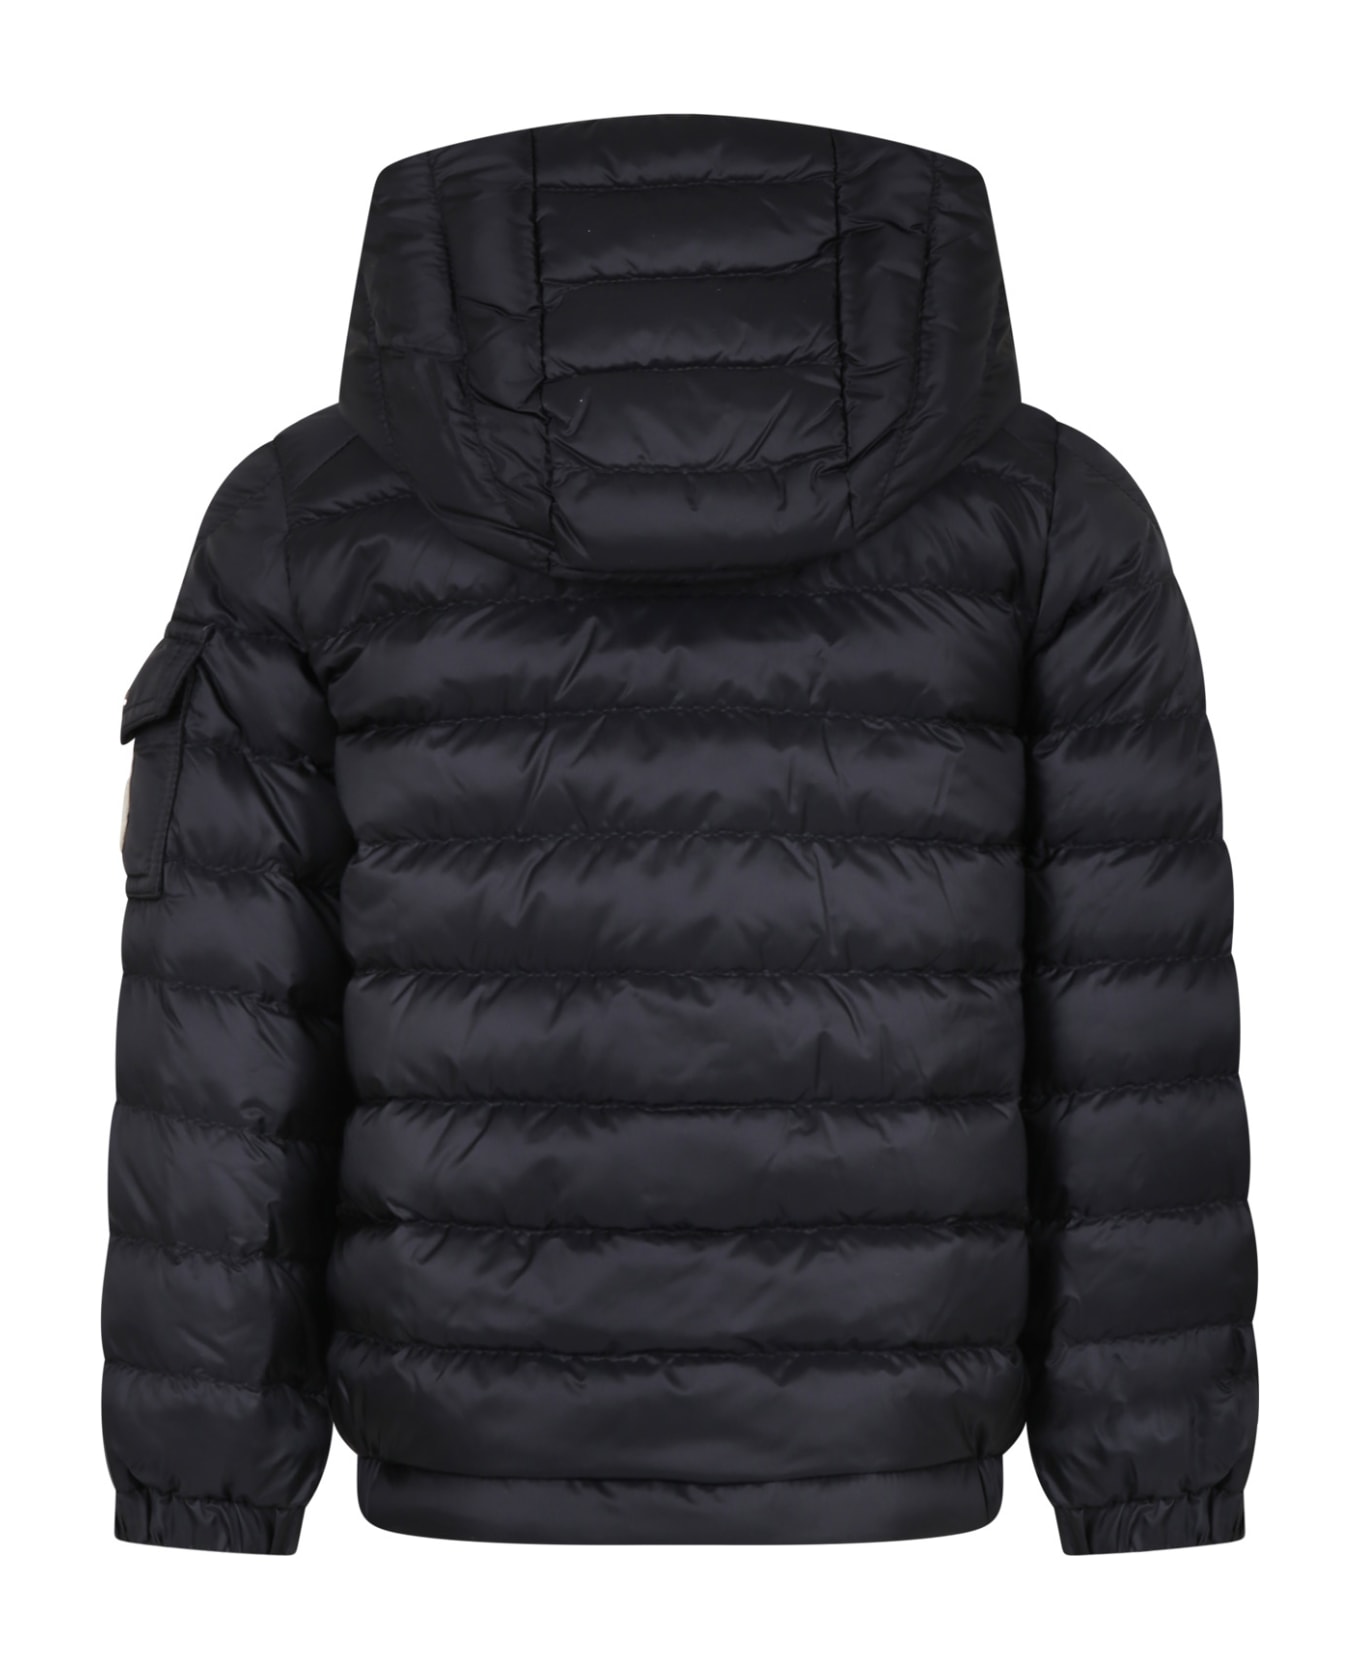 Moncler Lauros Black Down Jacket With Black Hood For Boy - Black